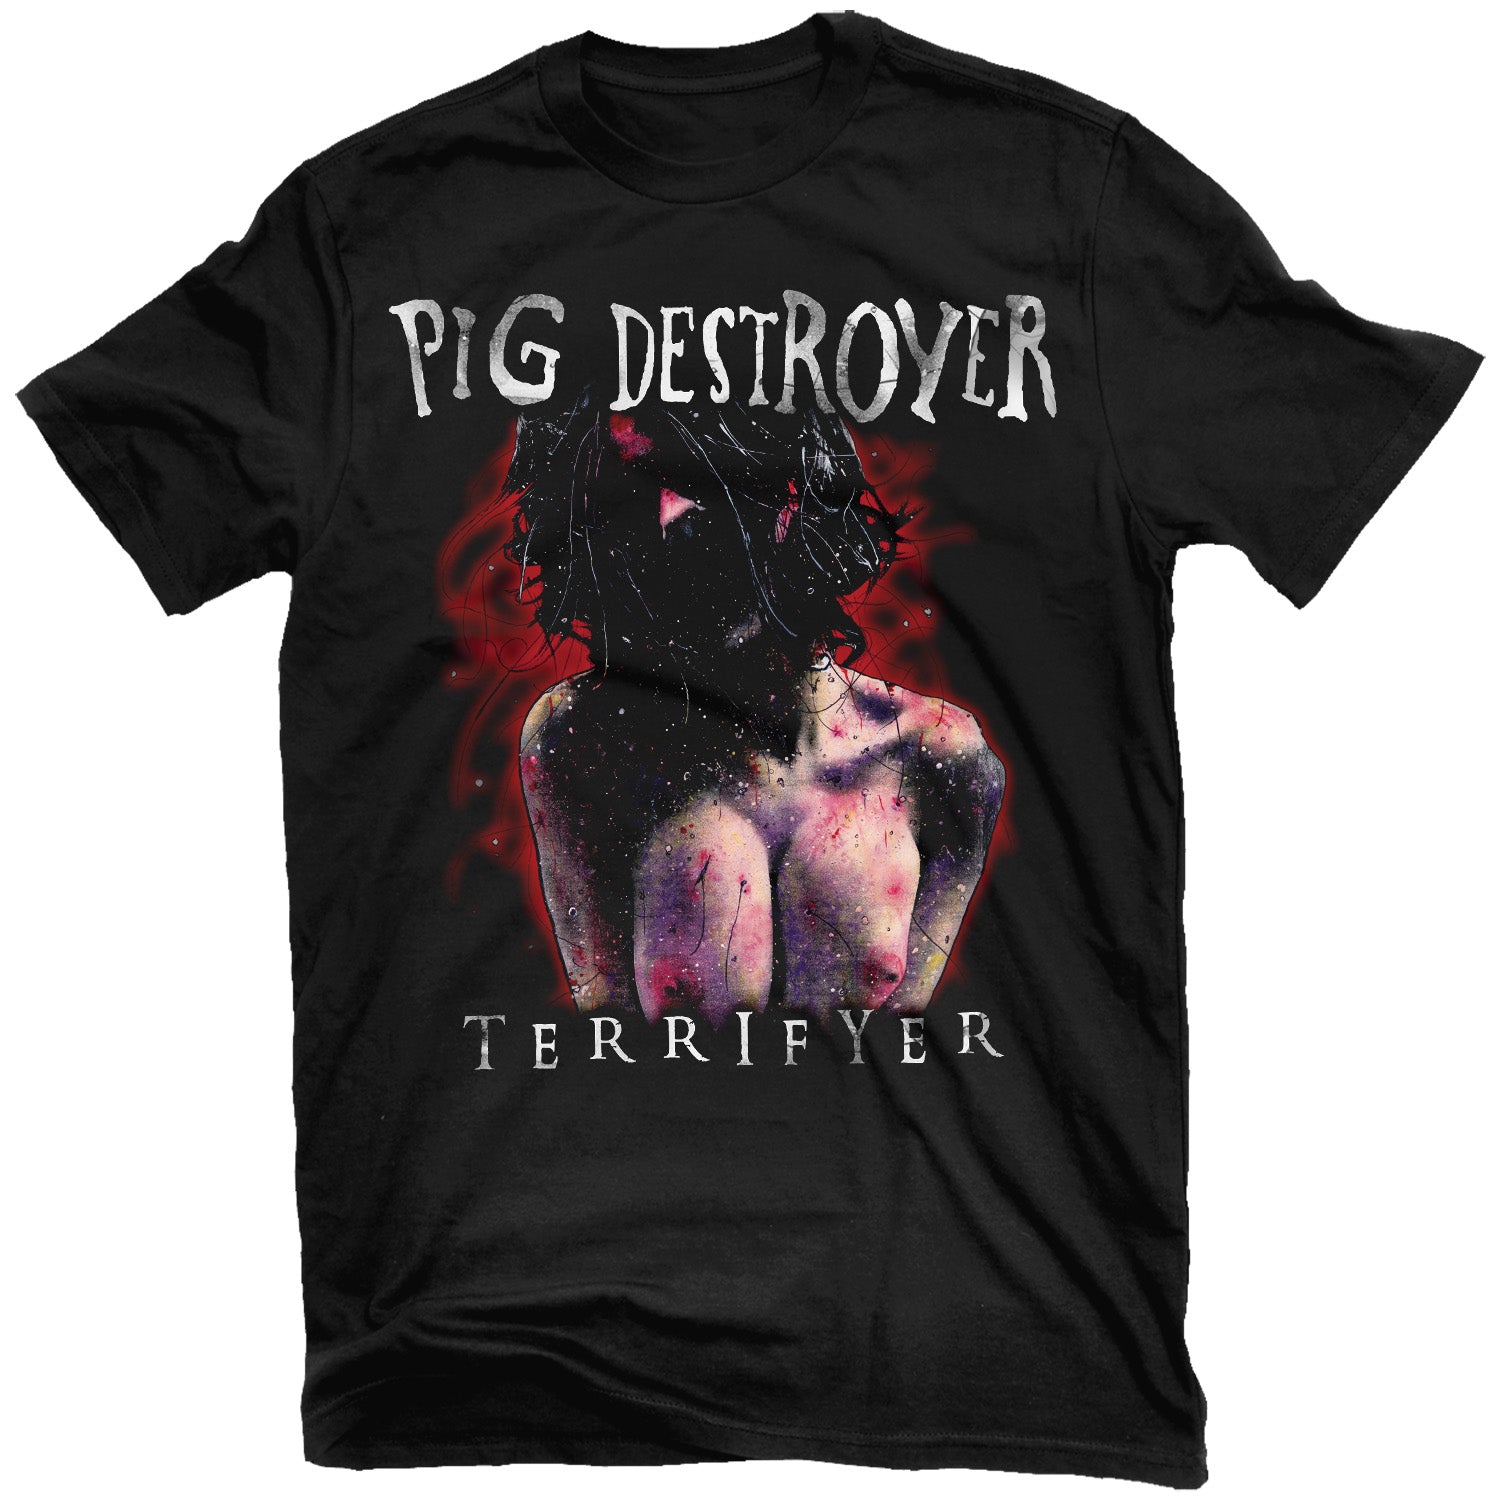 Pig Destroyer "Terrifyer" T-Shirt